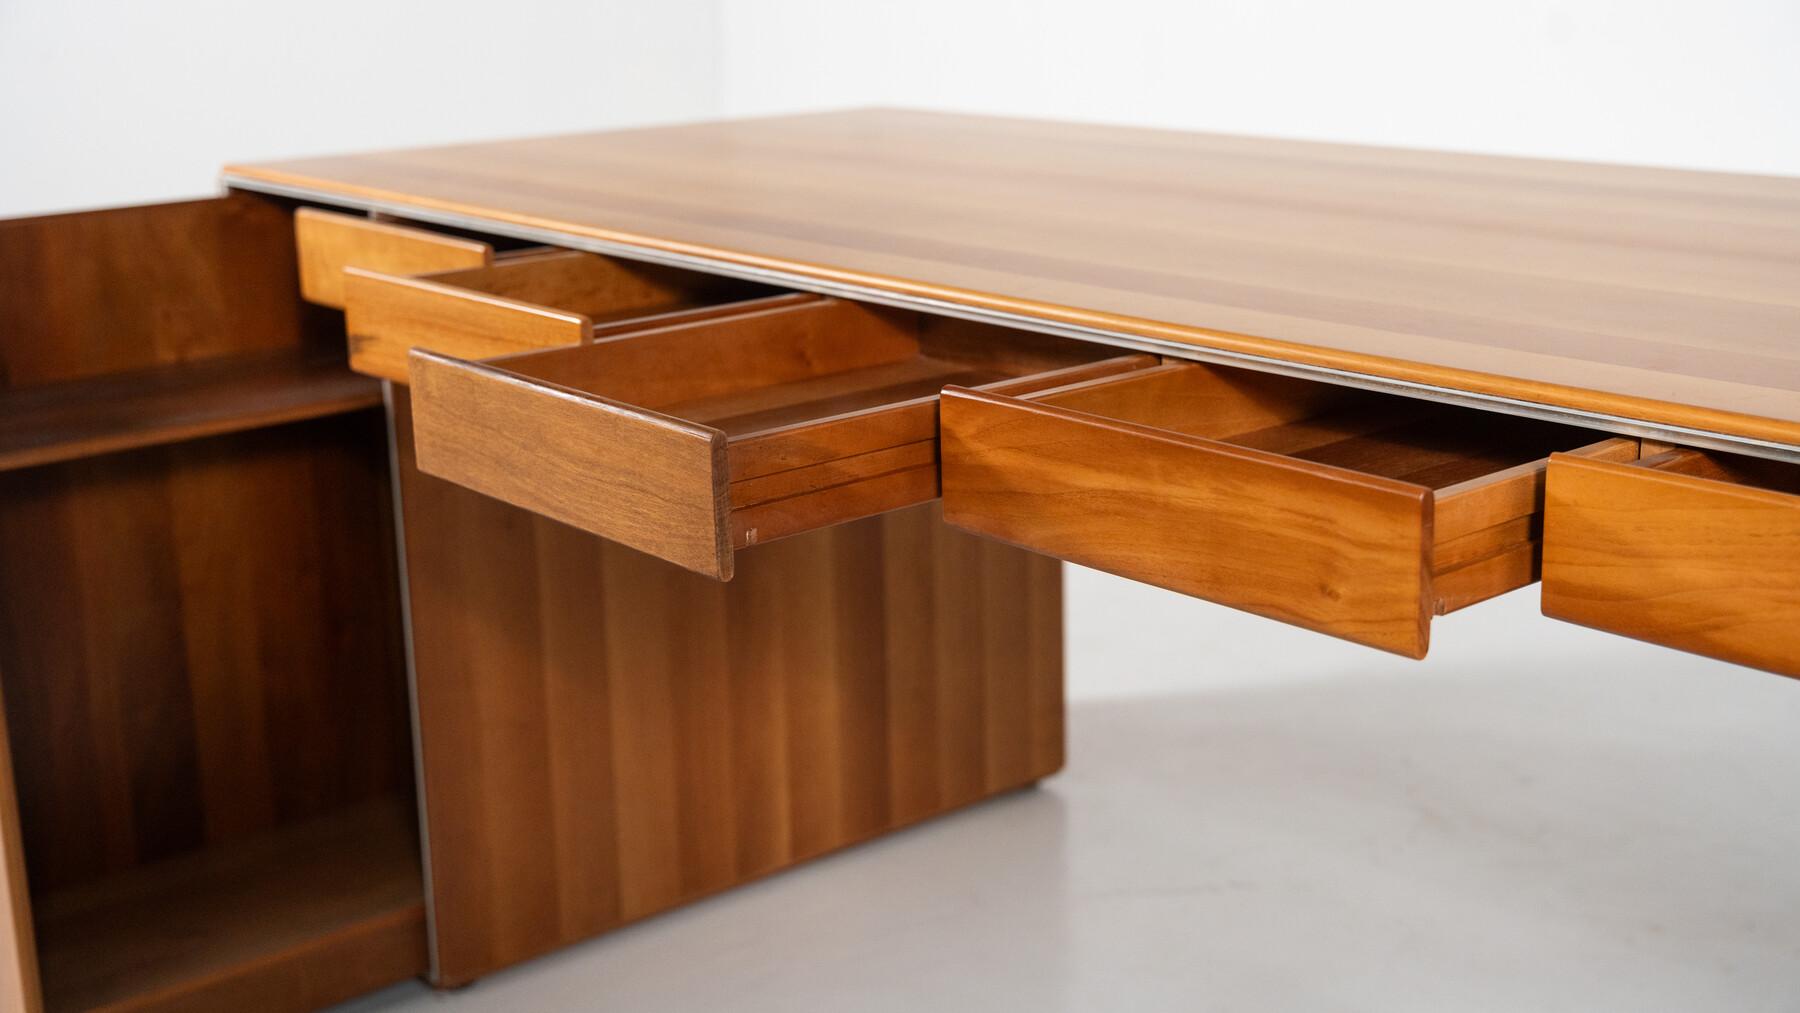 Wood Mid-Century Modern Desk by Afra and Tobia Scarpa, Stildomus 1970s